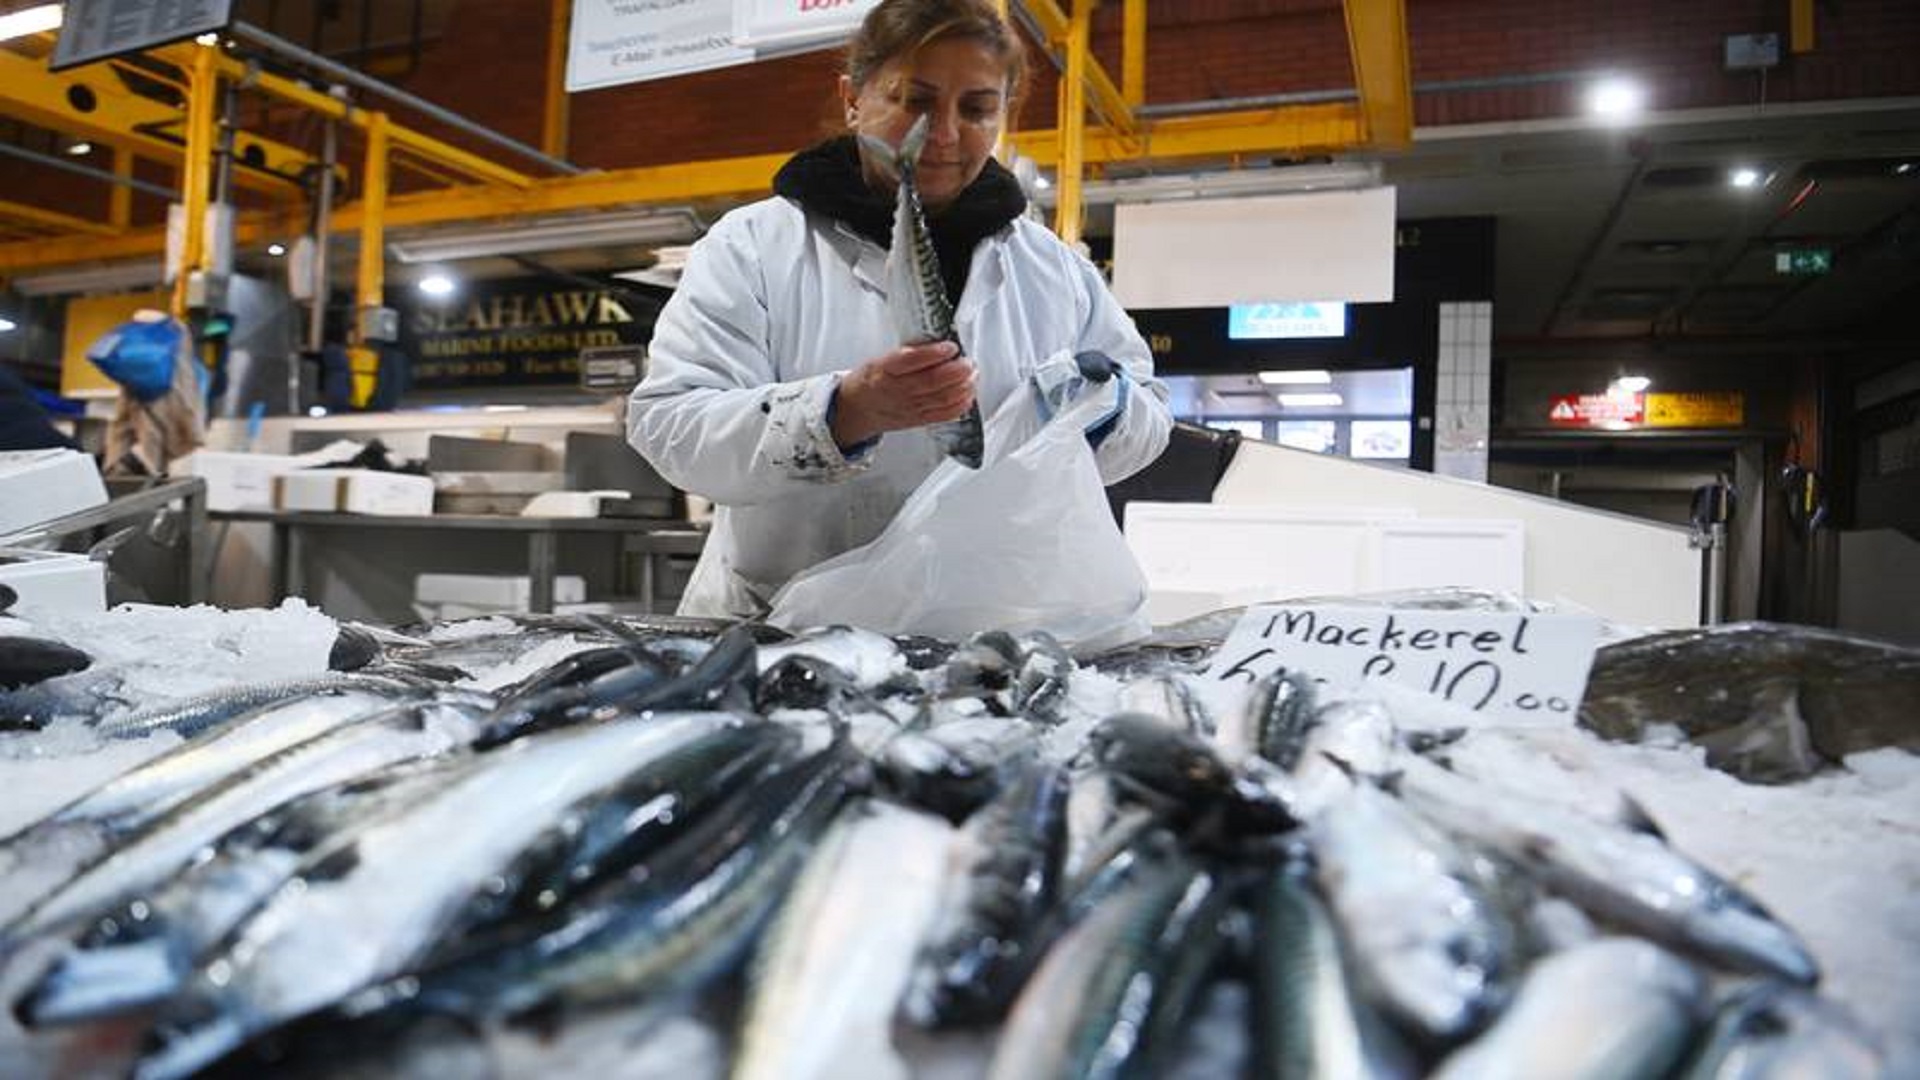 A worker adjusts her display at Billingsgate Fish Market in London. EPA